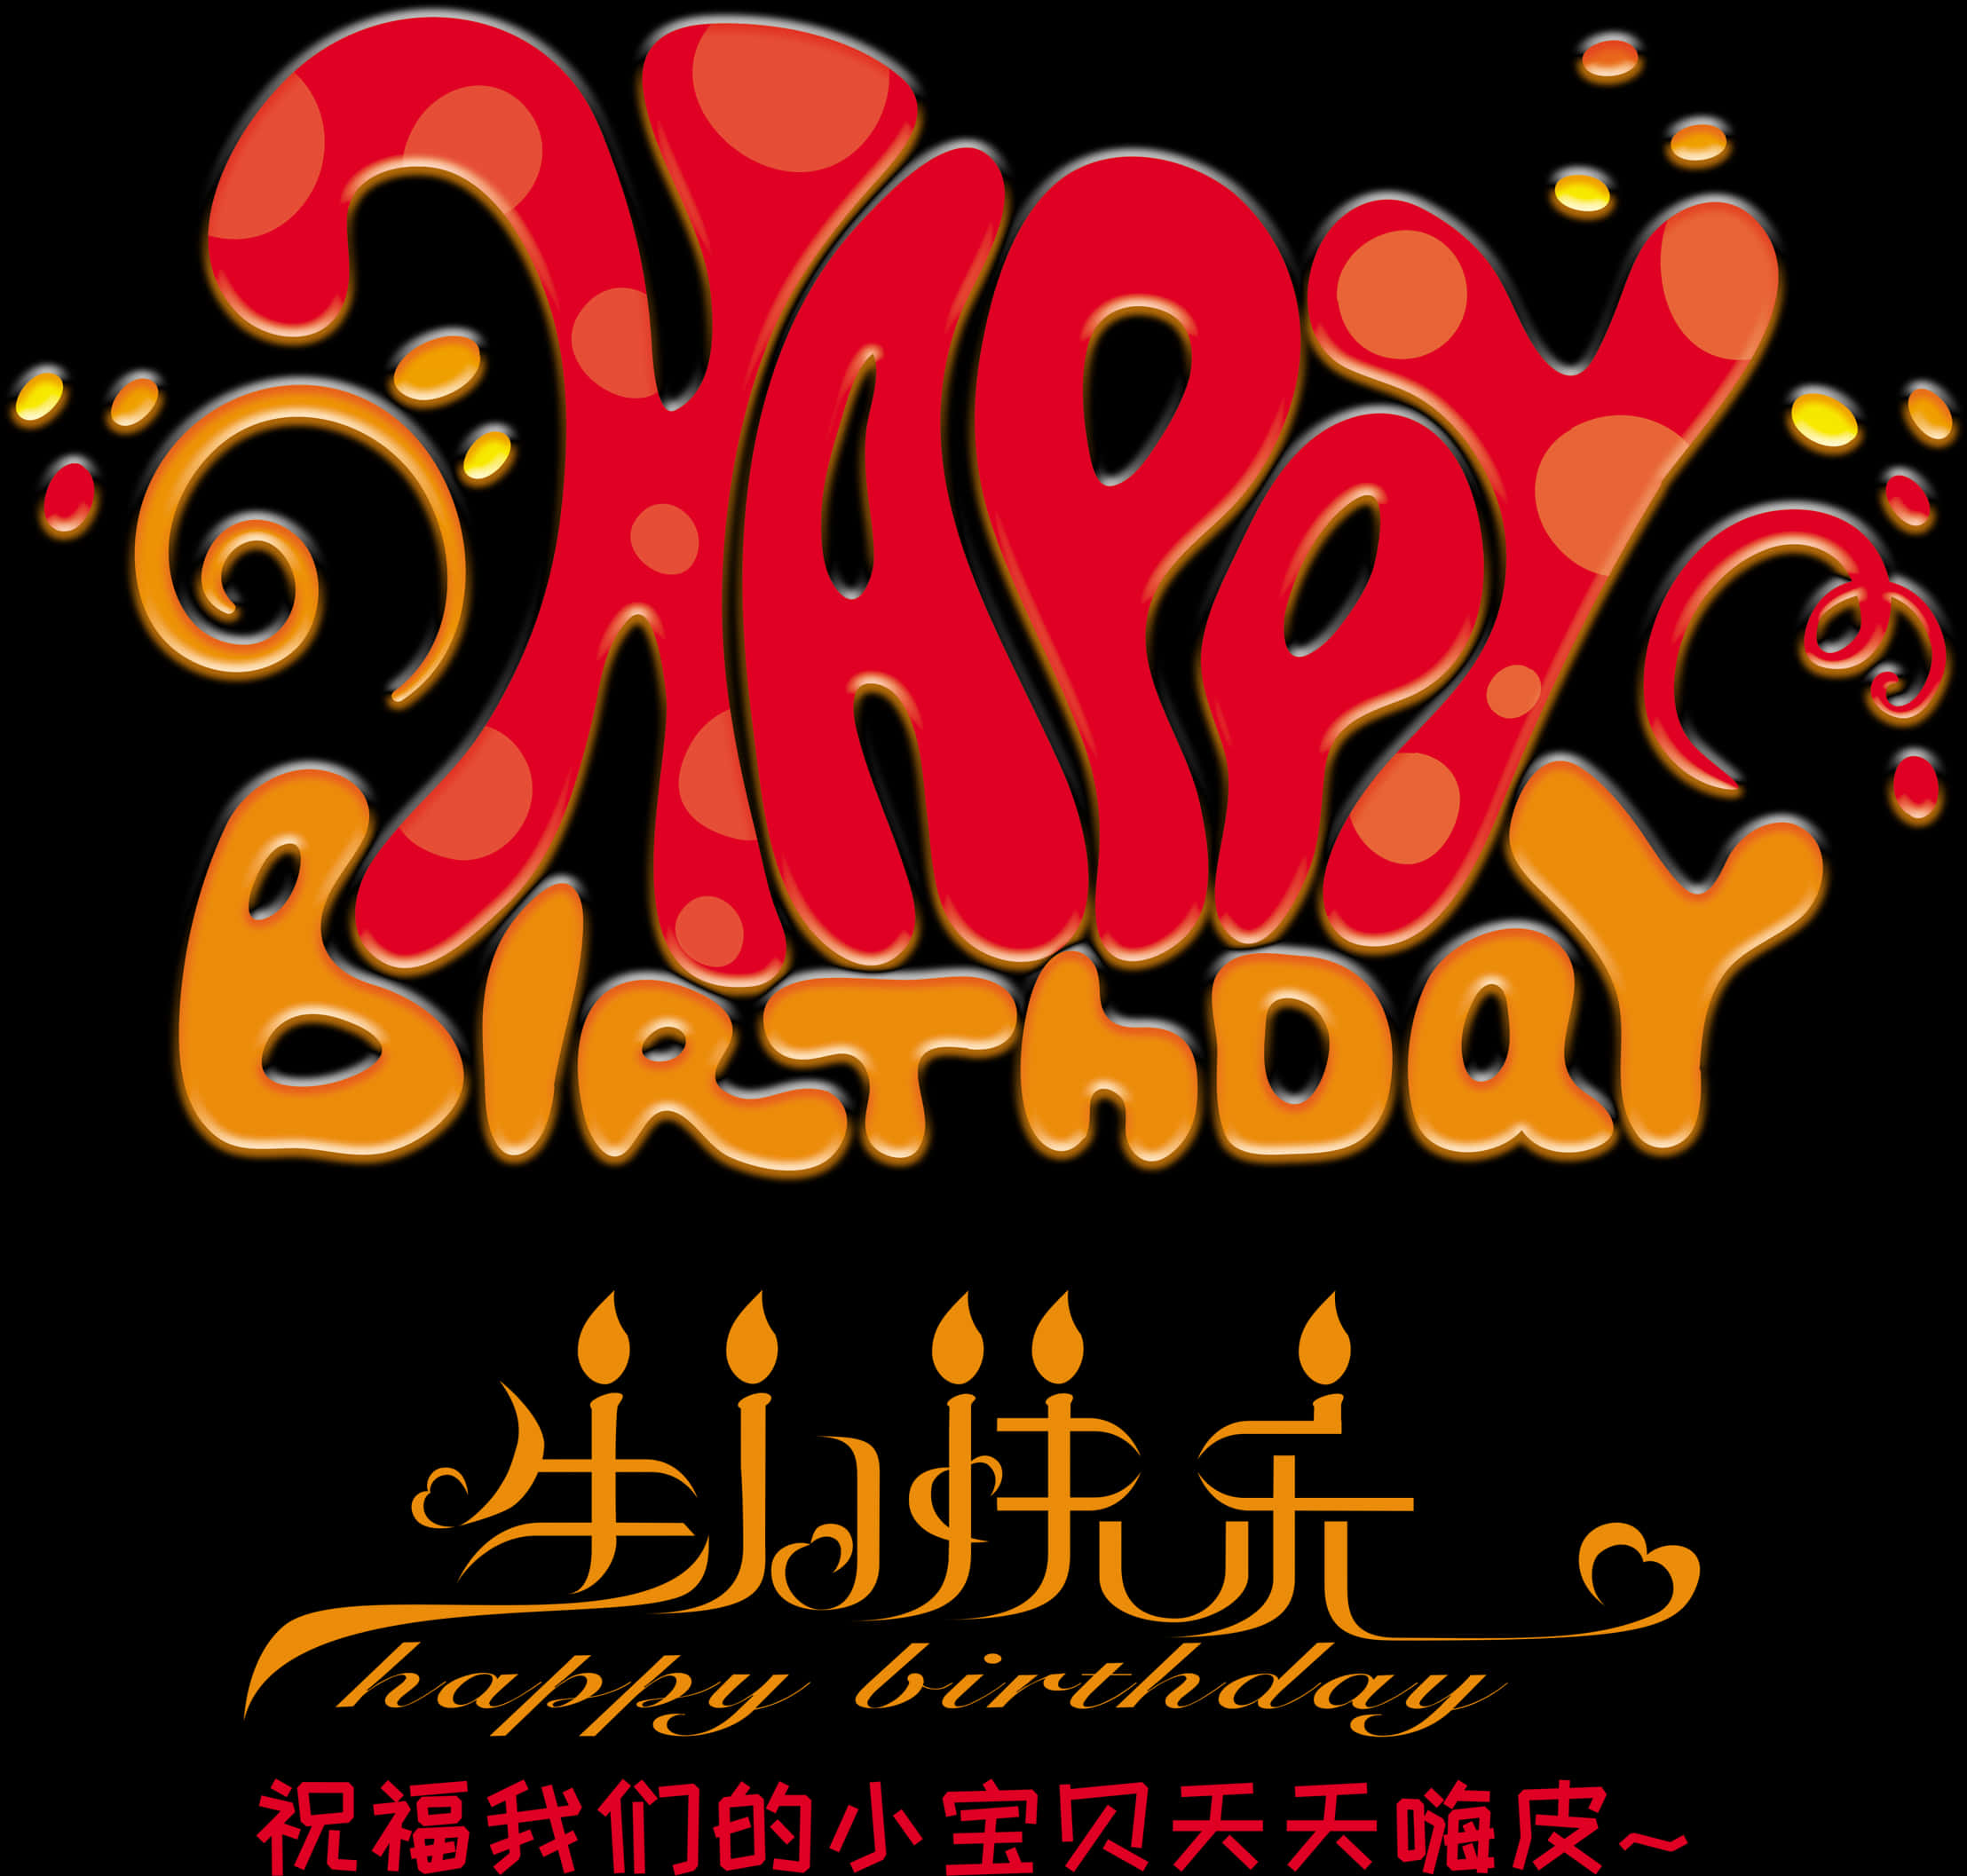 Vibrant Happy Birthday Calligraphy PNG image